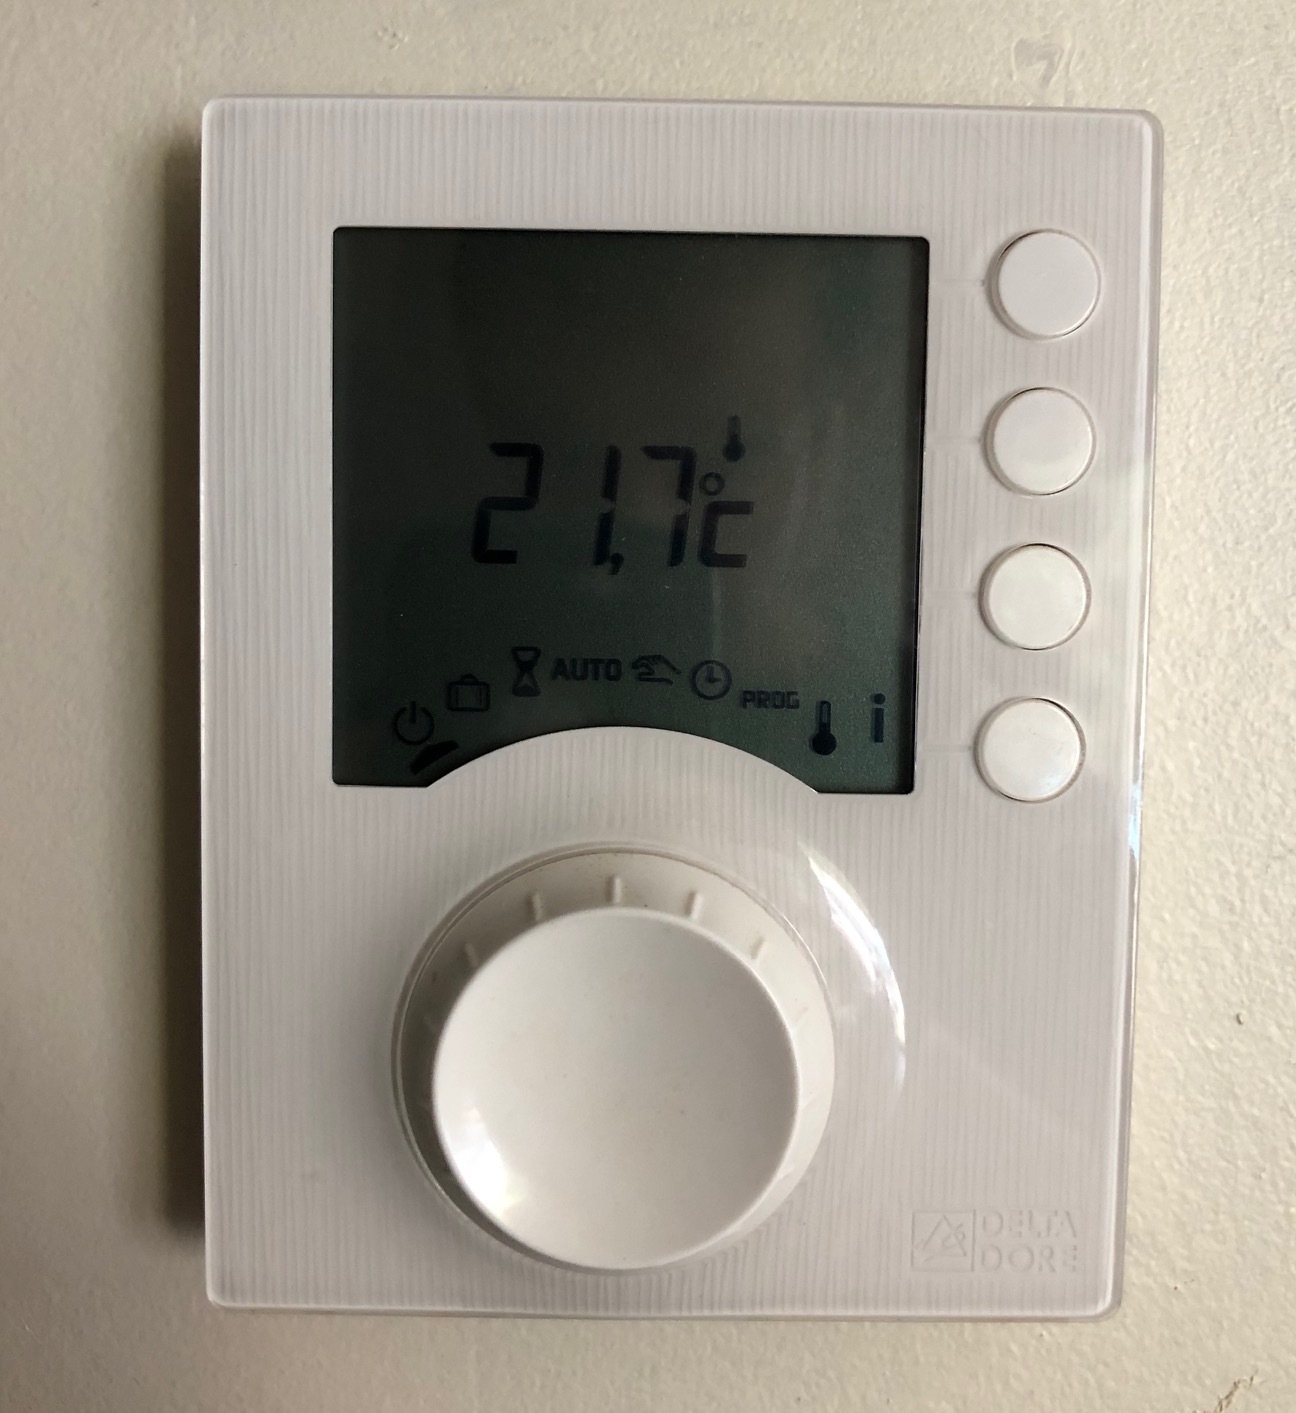 Thermostat Deltadore.jpg